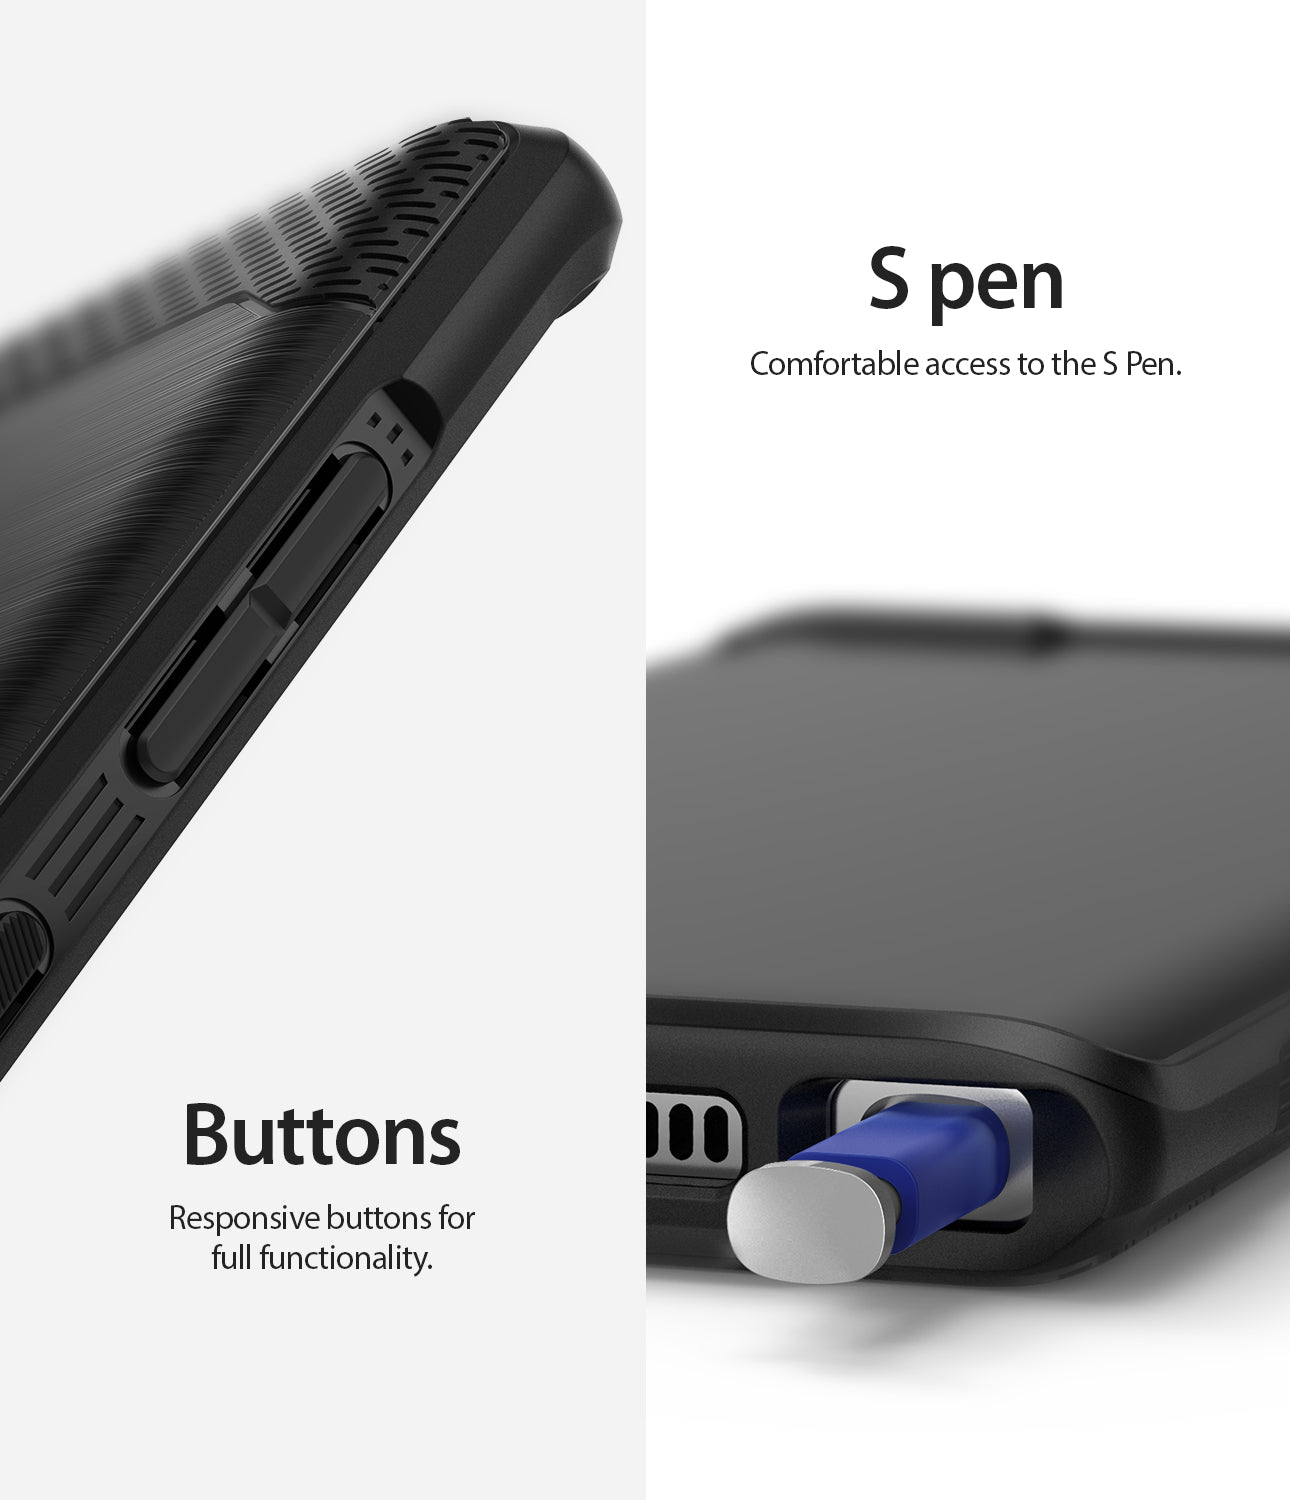 s pen accessible with precise button cutouts